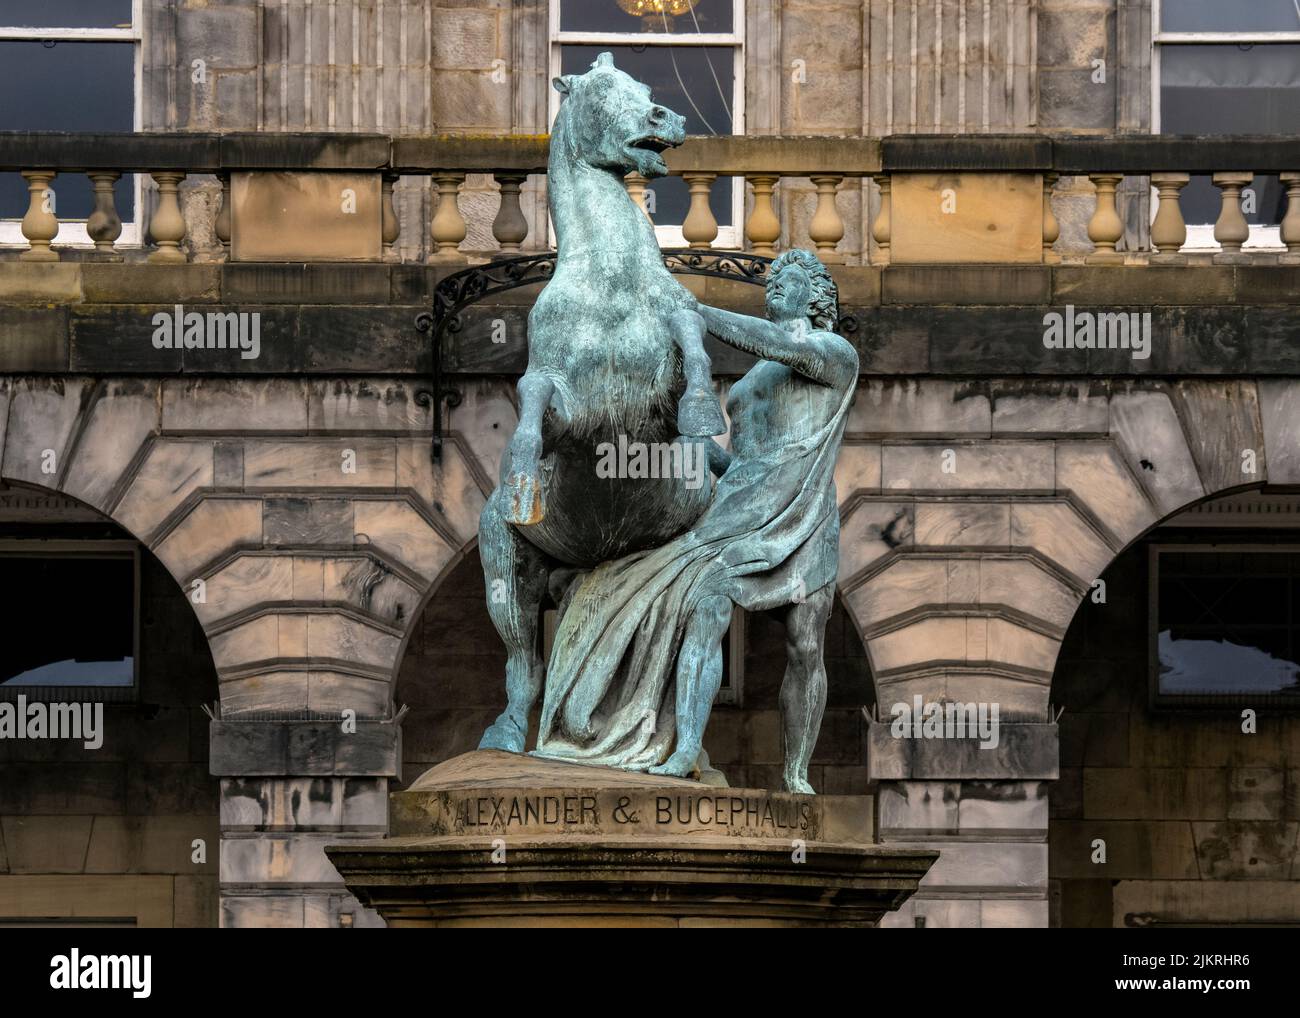 Statue of Alexander and Bucephalus, by John Steell, outside the City Chambers, Edinburgh, Scotland, UK. Stock Photo